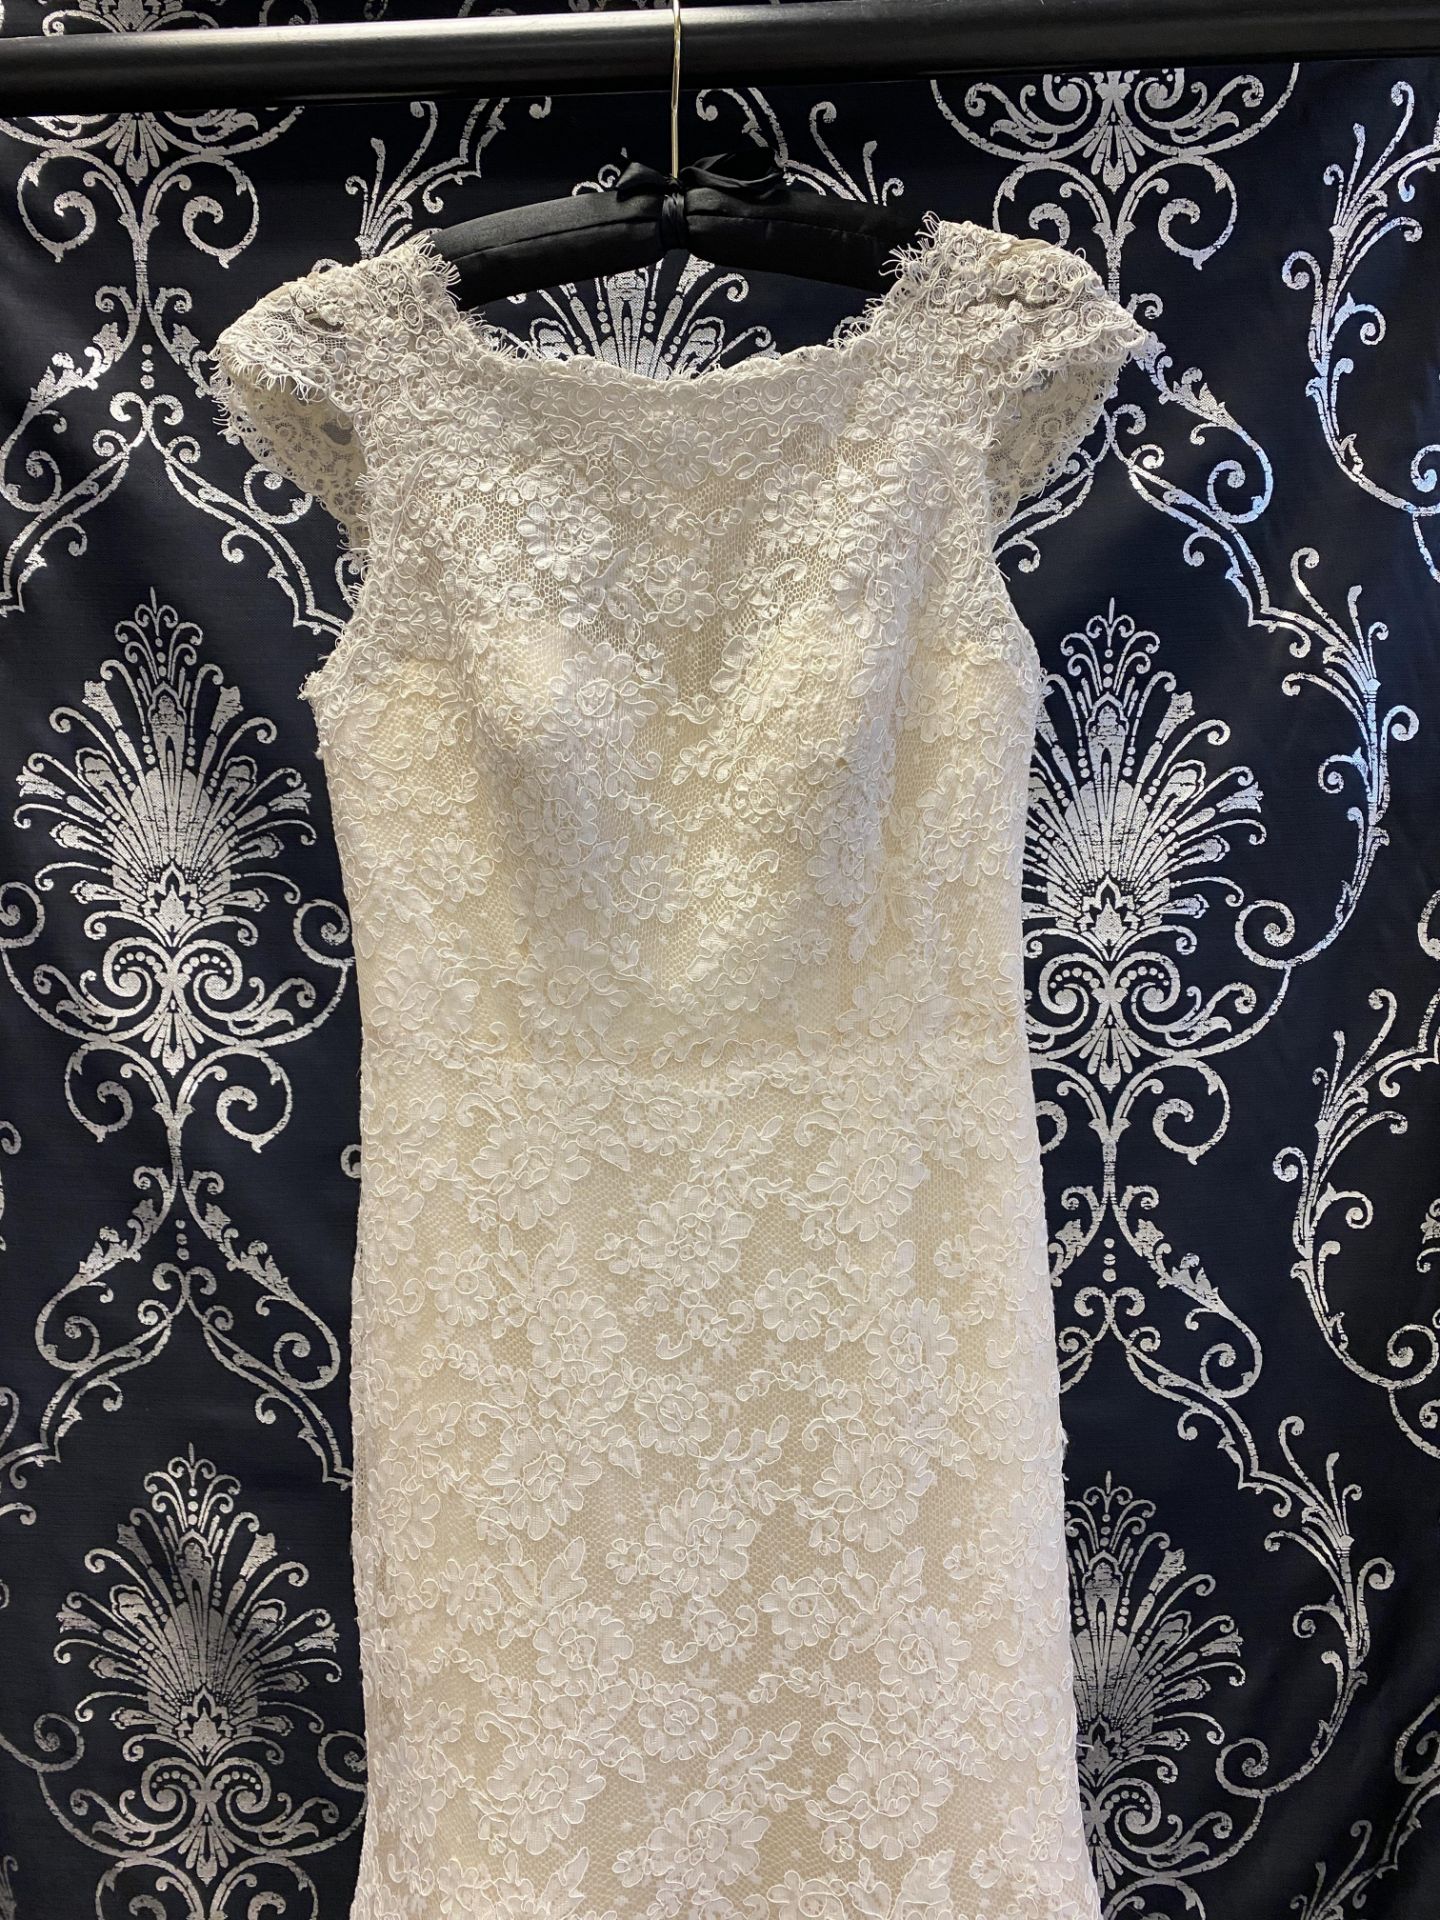 1 x ANNA SUL Y 'White Rose' Full Lace Mermaid Style Designer Wedding Dress RRP £1,250 - Image 3 of 11